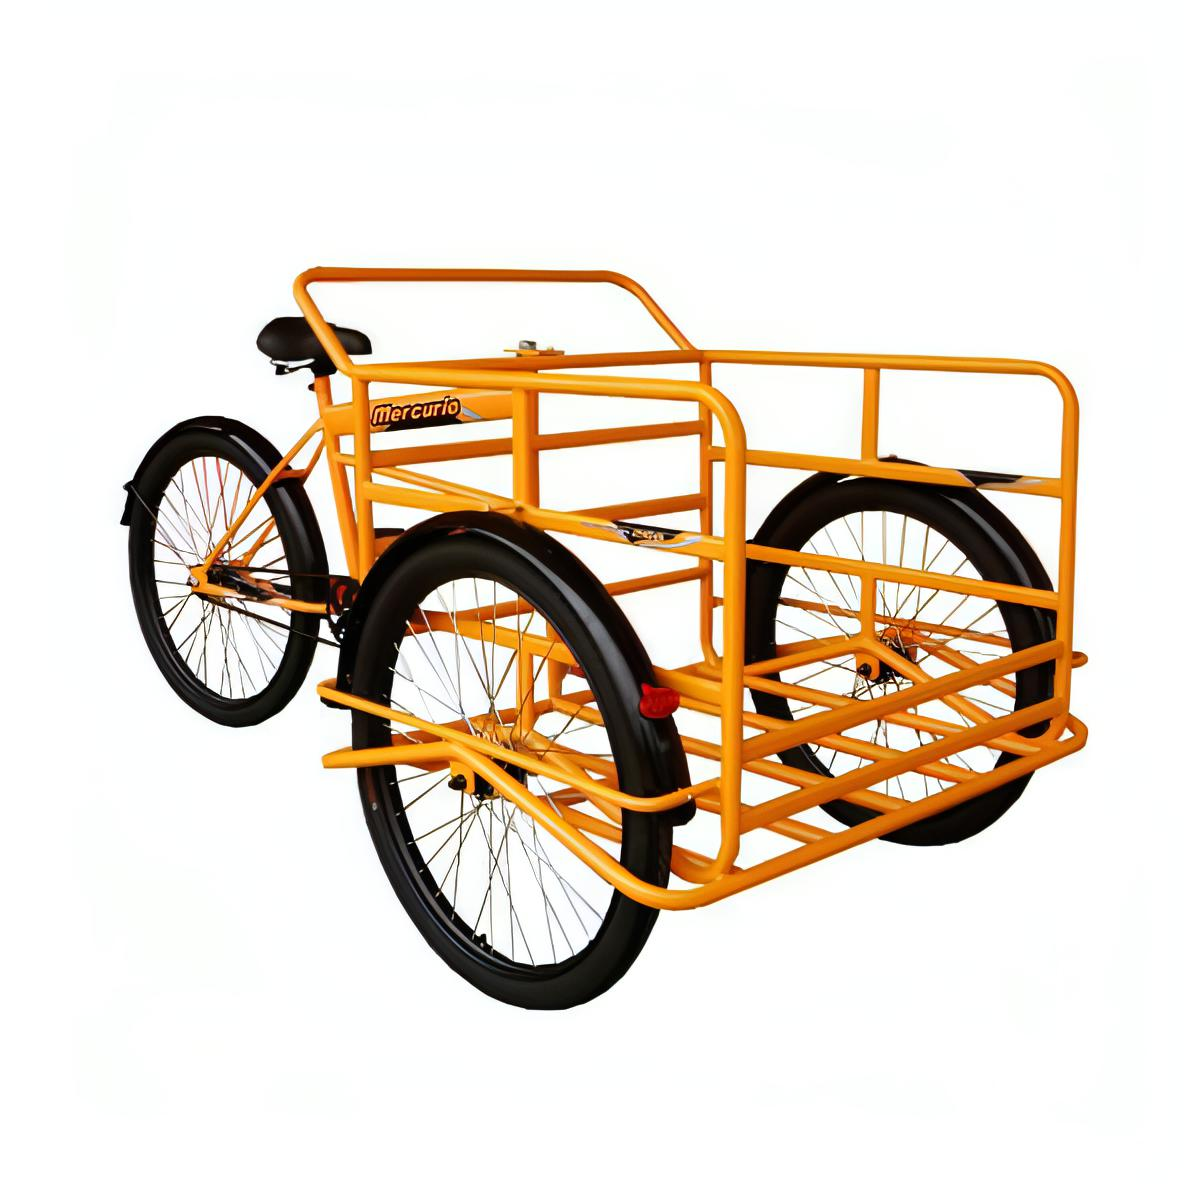 Triciclo Mercurio Amarillo Modelo Amar